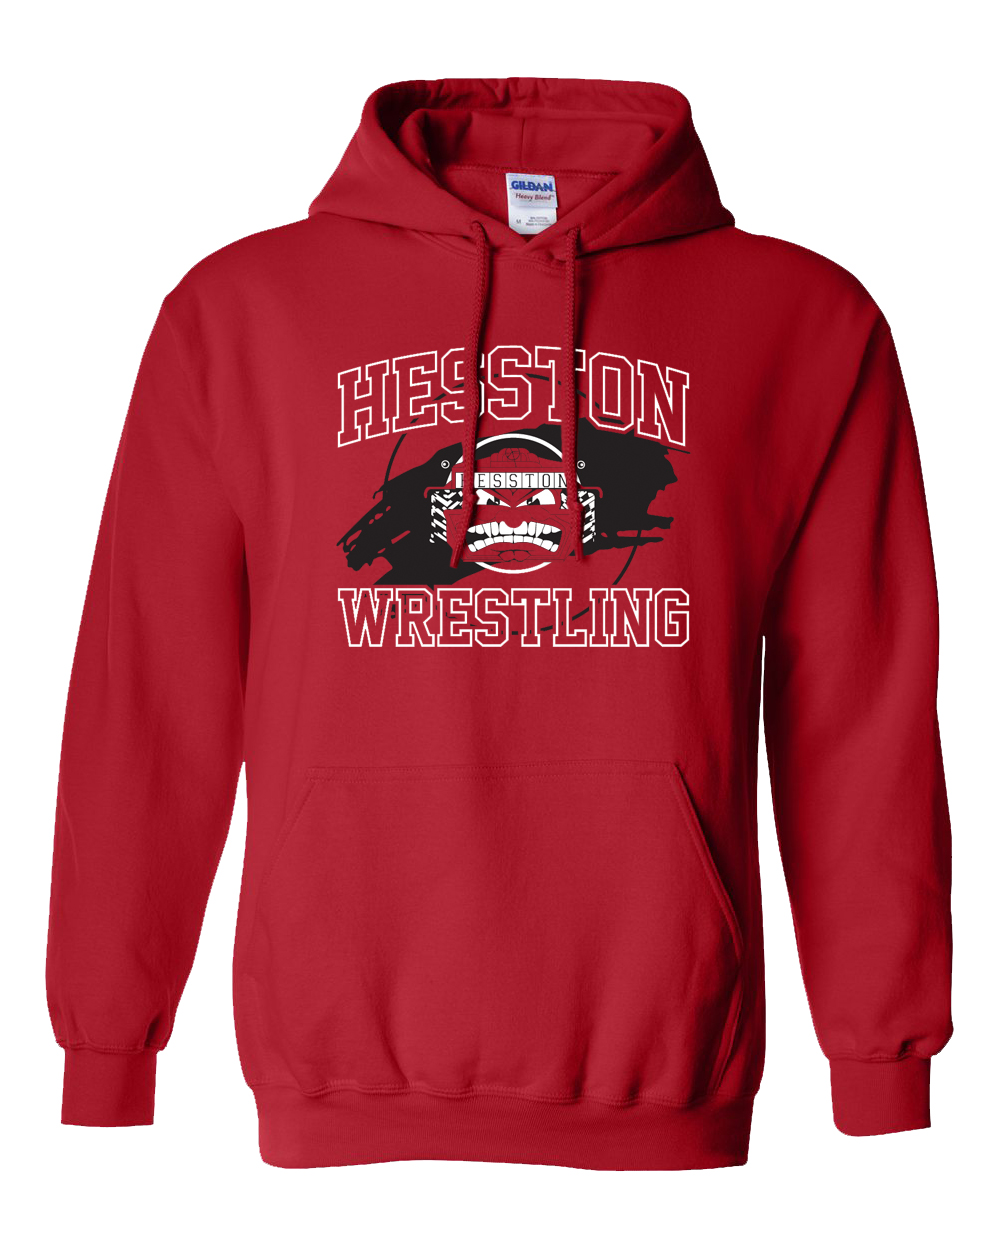 Hesston High School Wrestling Hooded Sweatshirt - Atomic